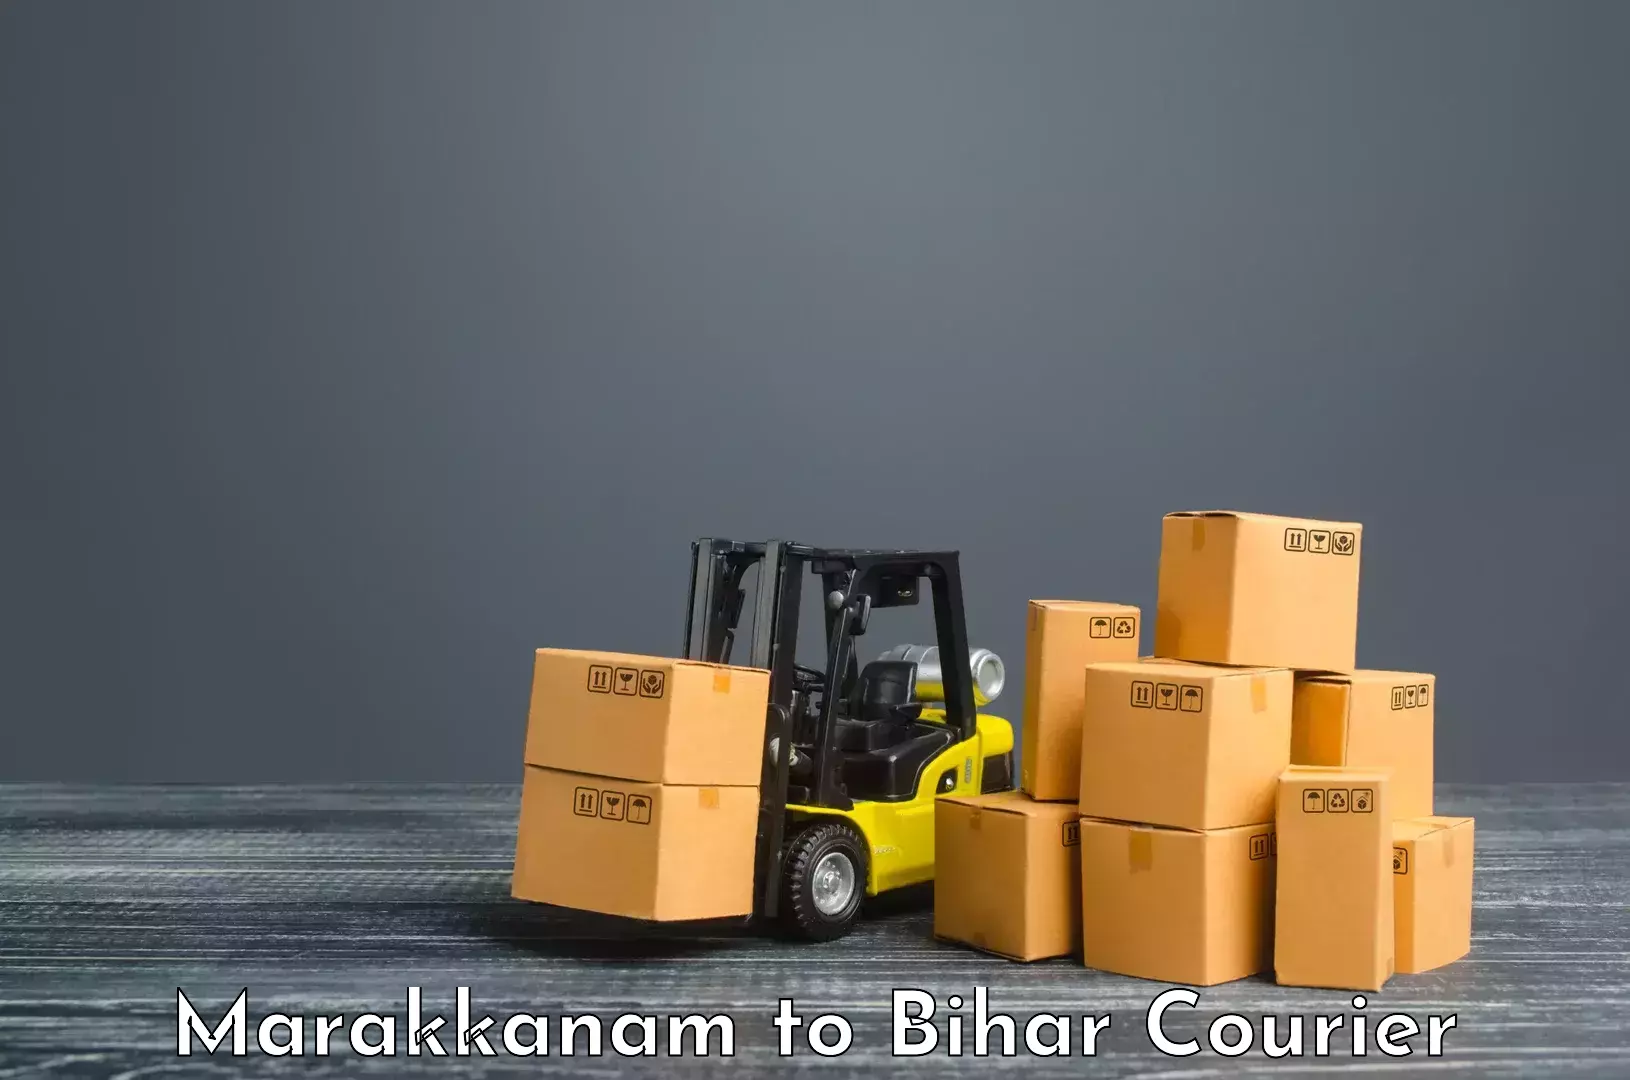 24/7 courier service Marakkanam to Barbigha